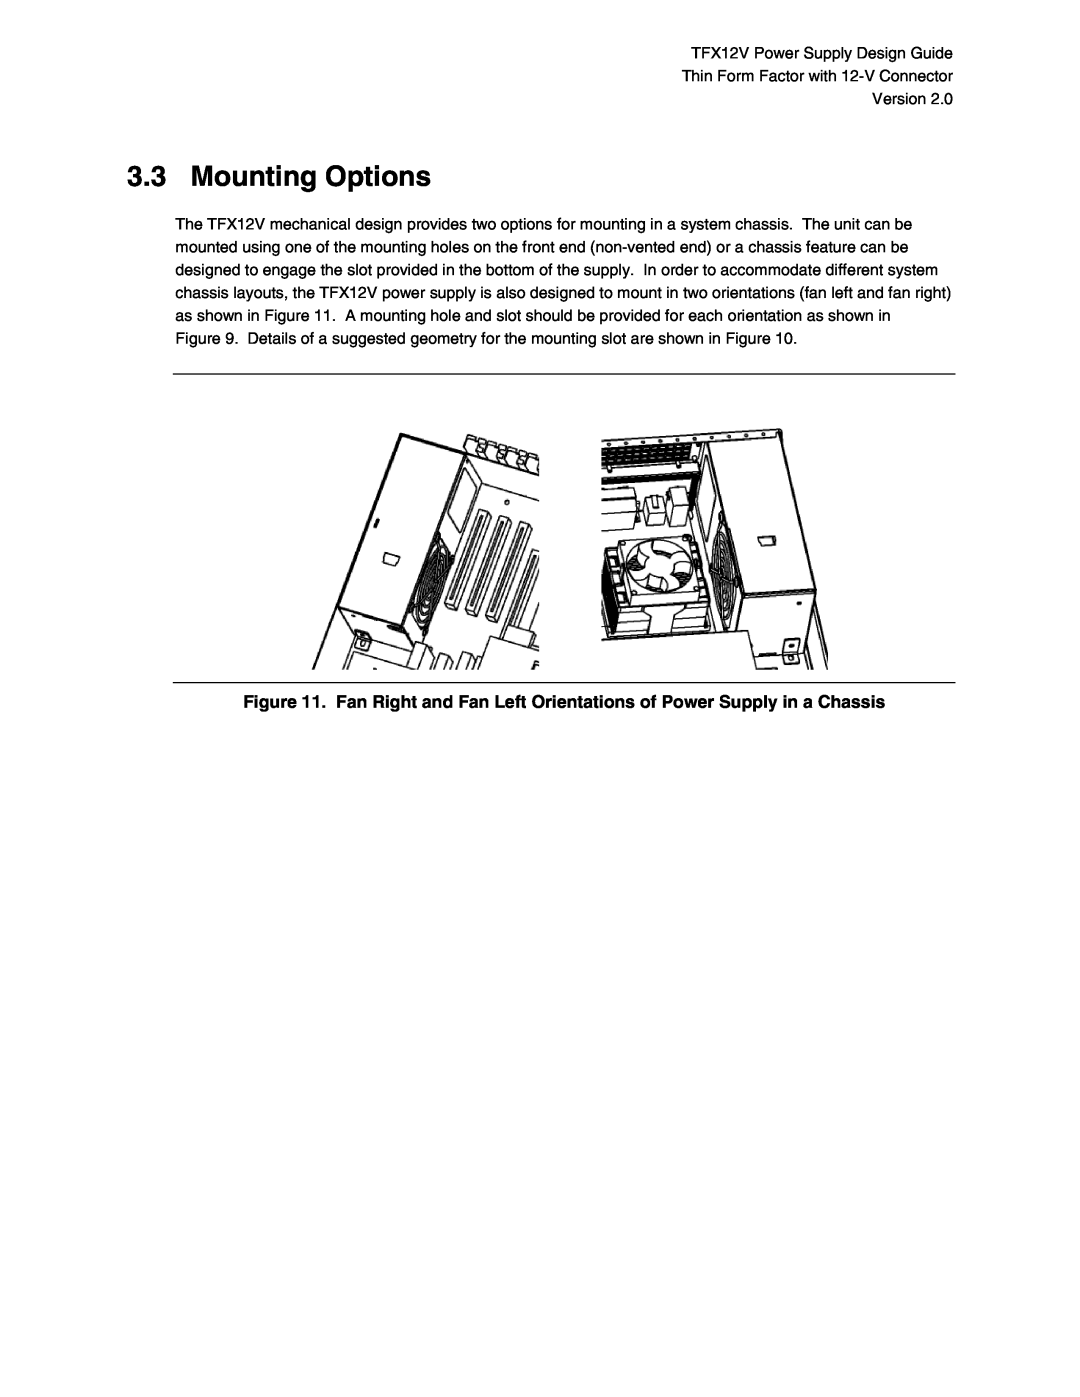 Intel TFX12V manual Mounting Options 